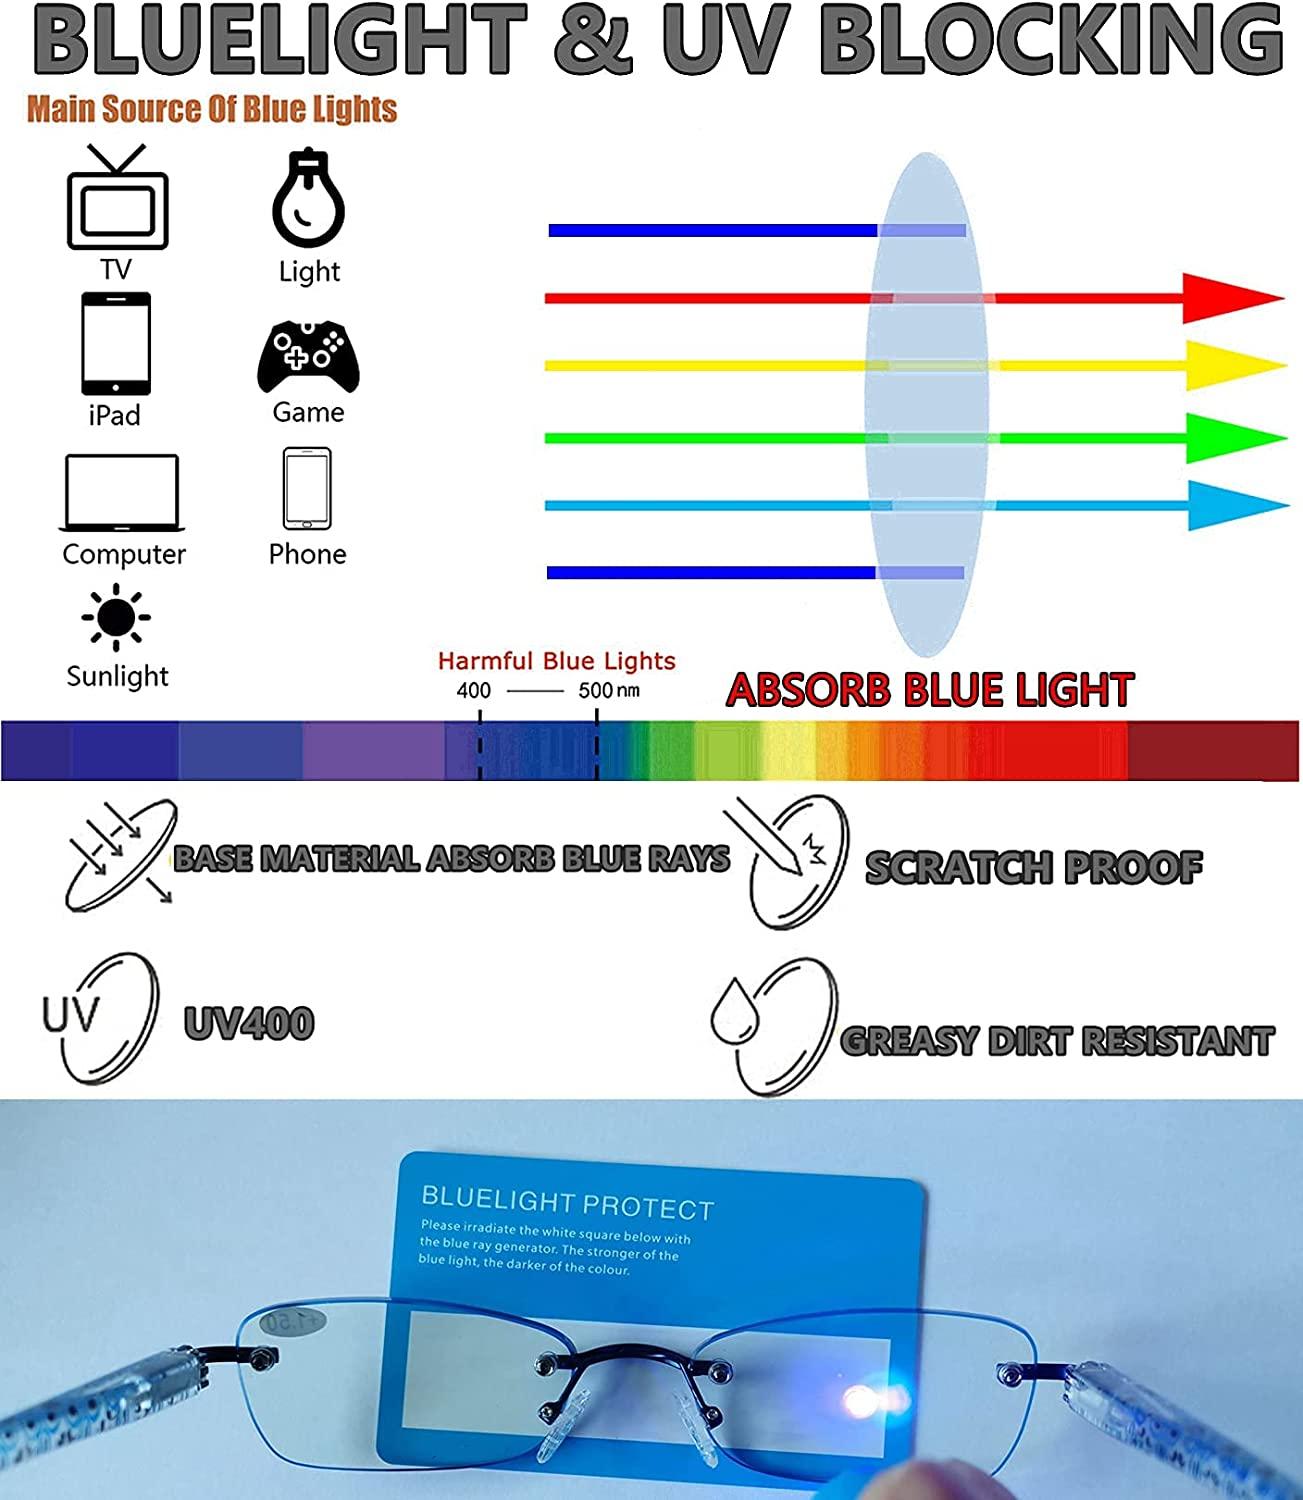 4 Pack Thicker Frame Blue Light Blocking Reading Glasses Women Men 4 Pairs Mix / +1.25